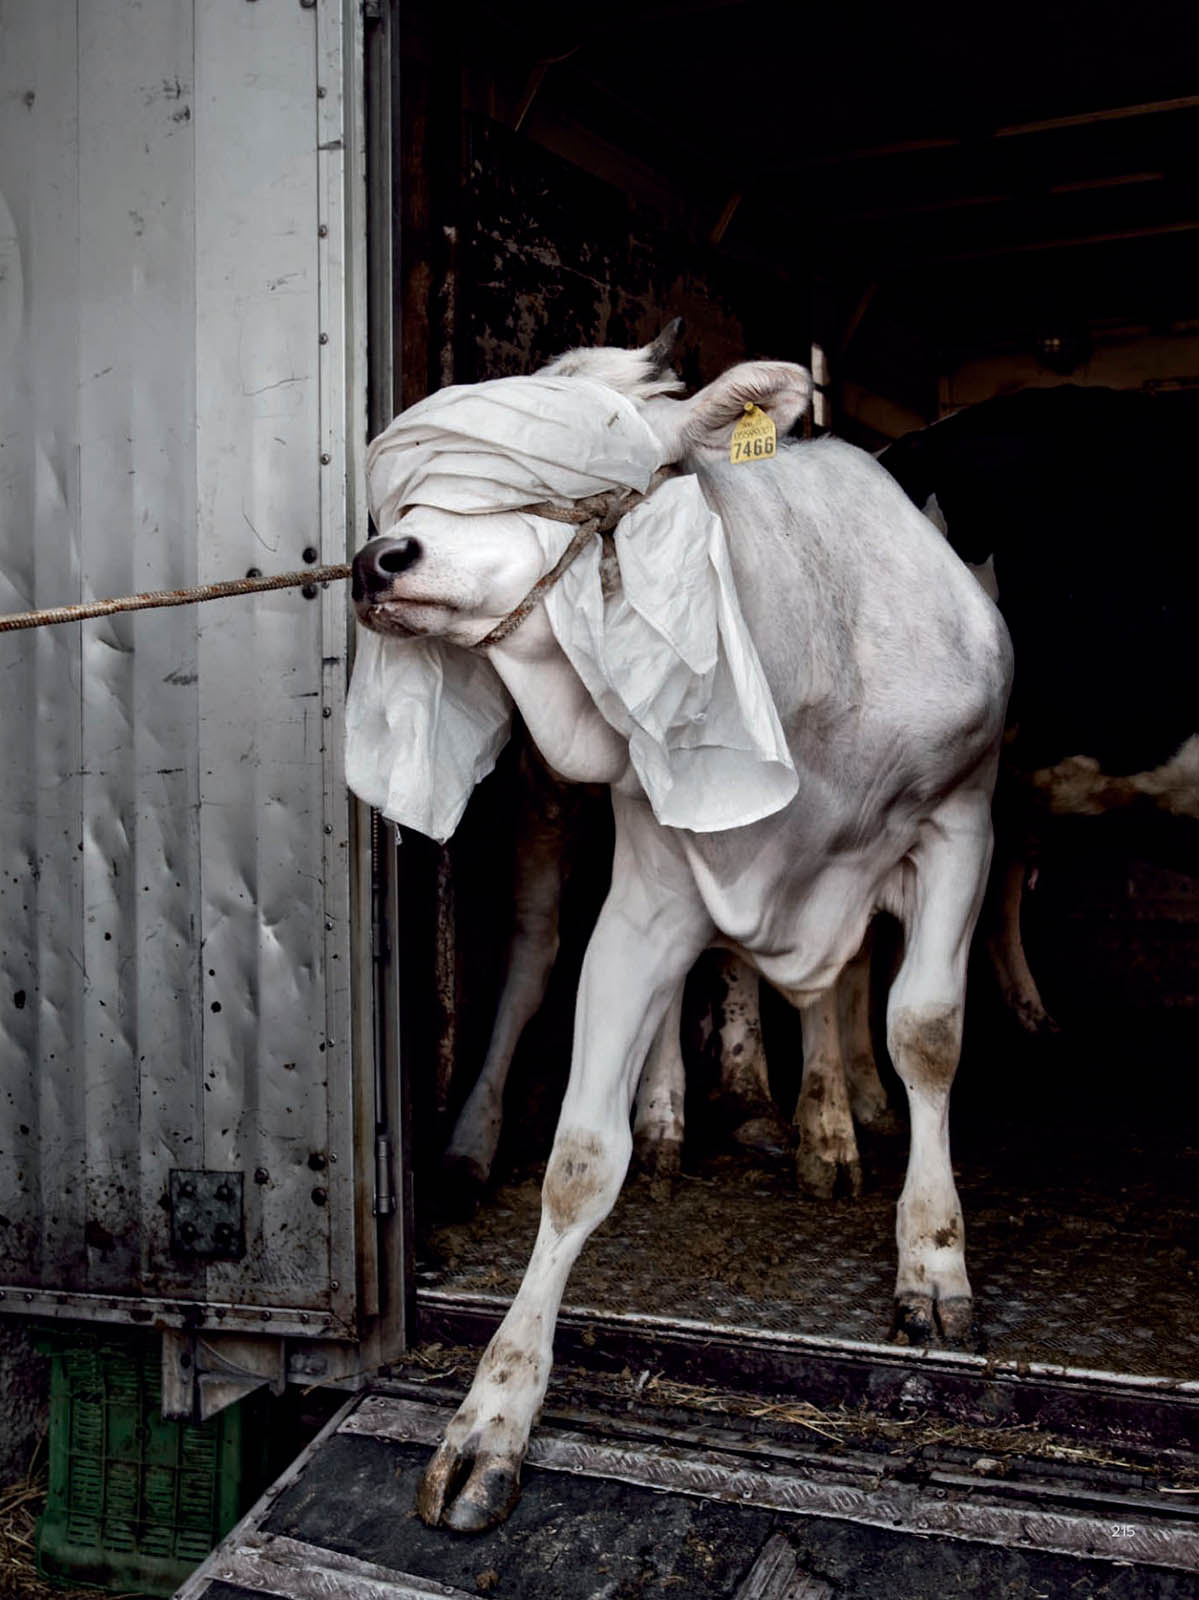 photographer-exposes-animal-abuse-and-suffering-worldwide-kpim